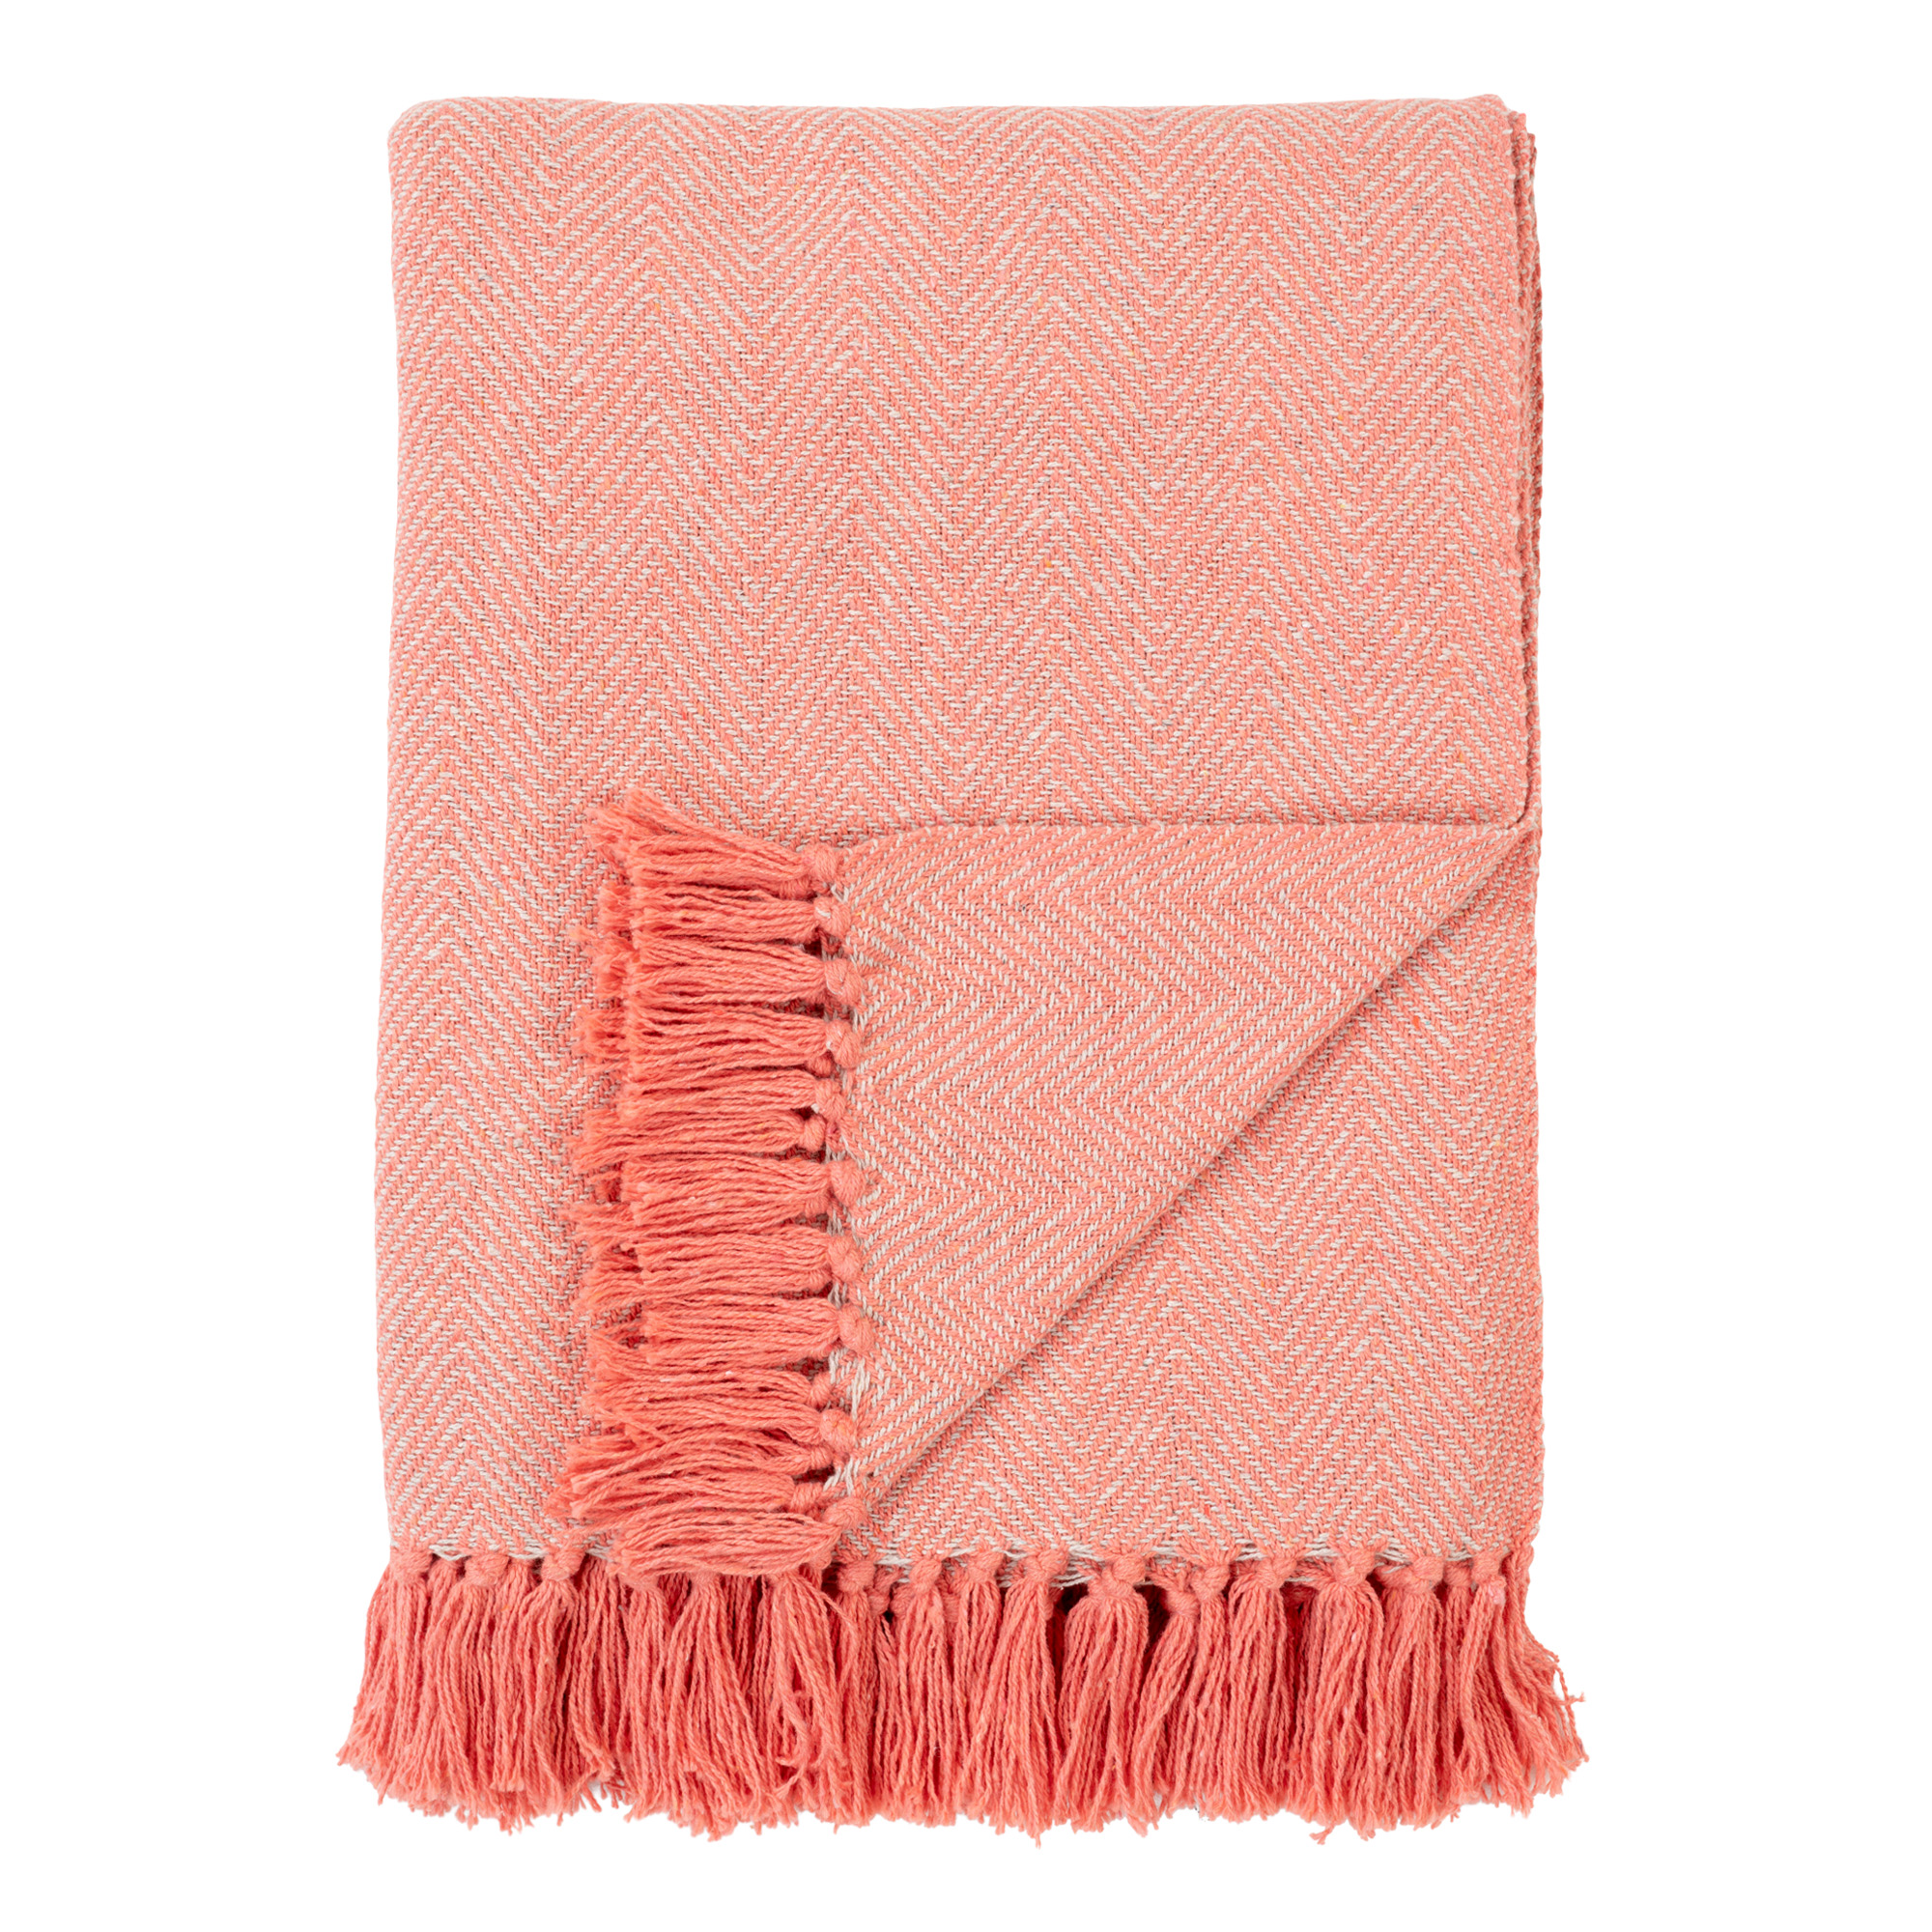 Cort Blanket - Deken in roze en wit katoen dessin A